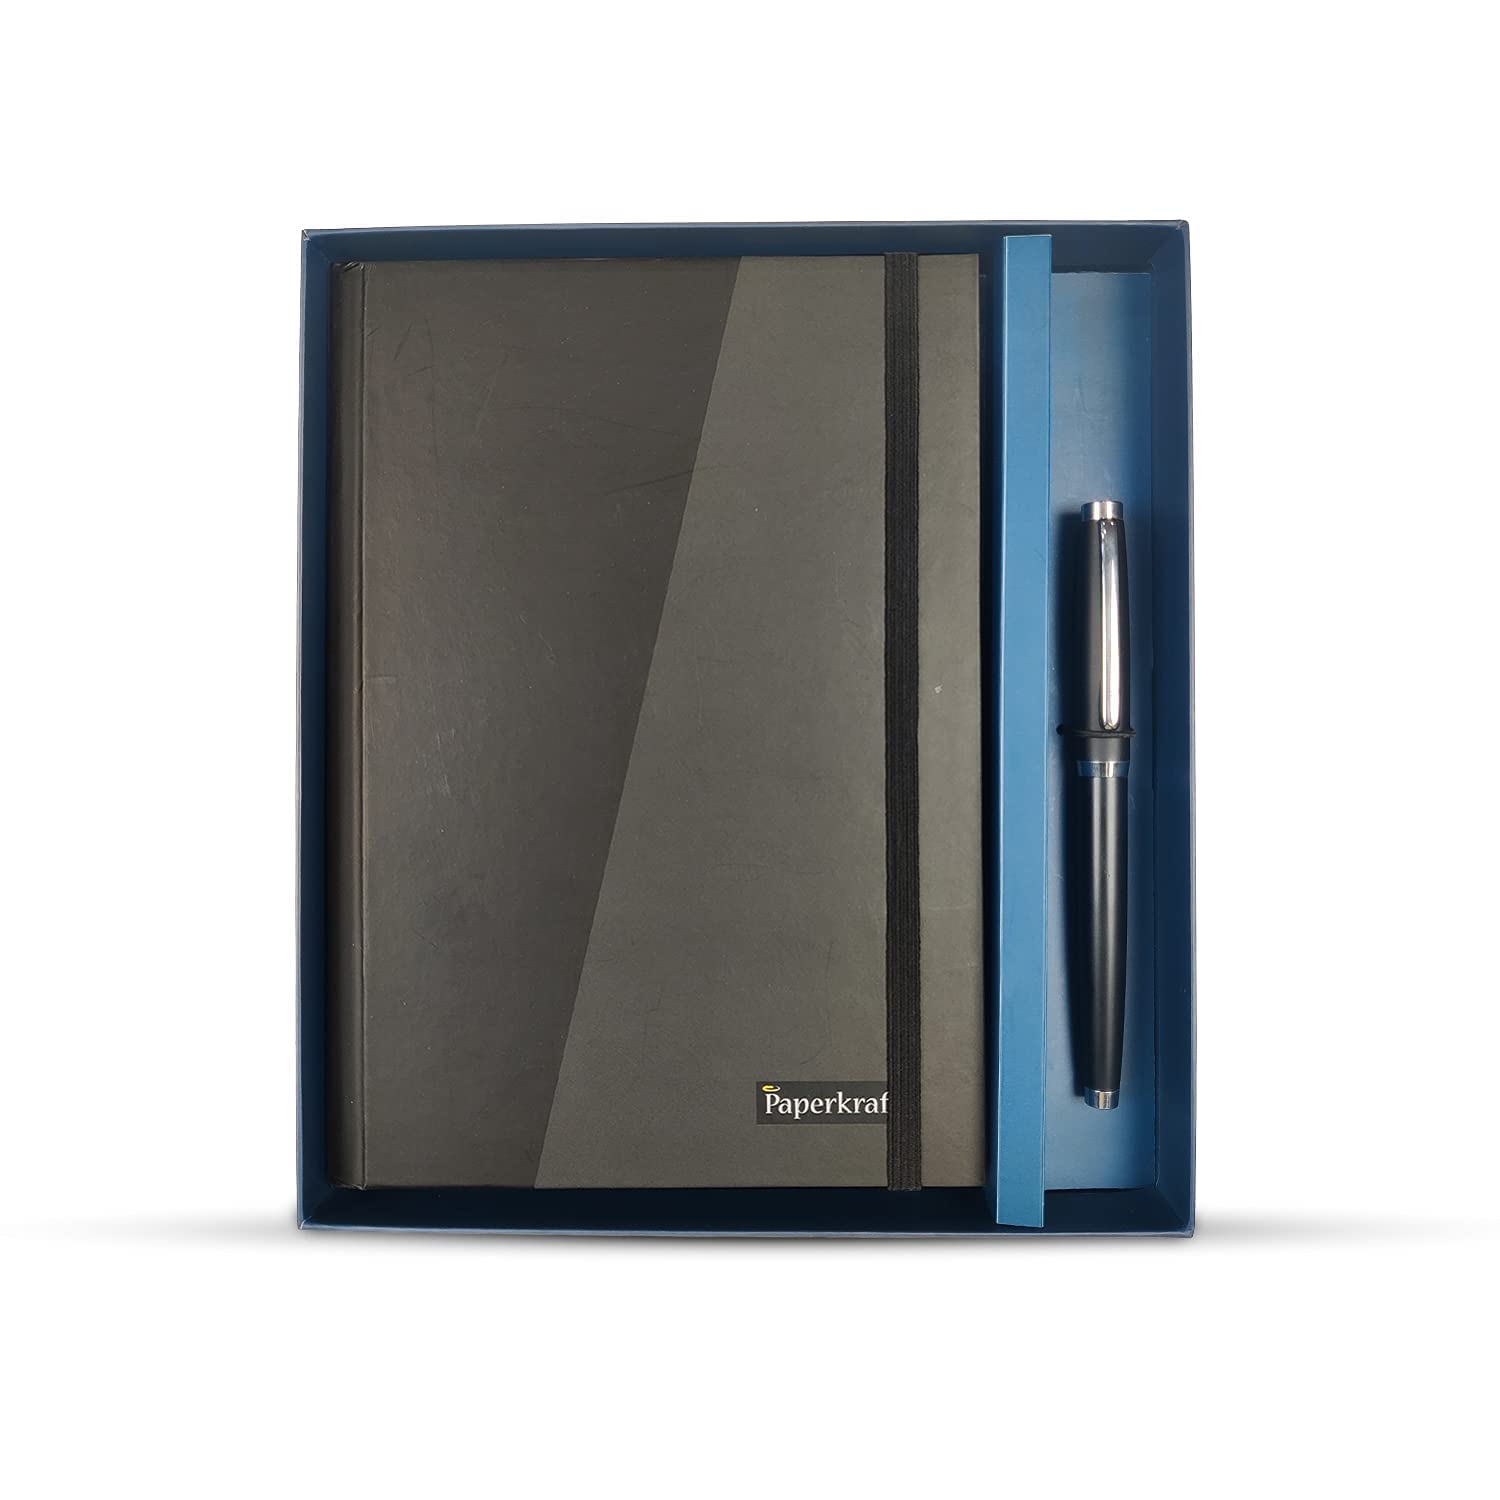 Paperkraft Expressions Gift Pack (Roller Ball Pen + A5 Hardbound Notebook)|Premium Metal Body Pen & Elegantly Designed Notebook